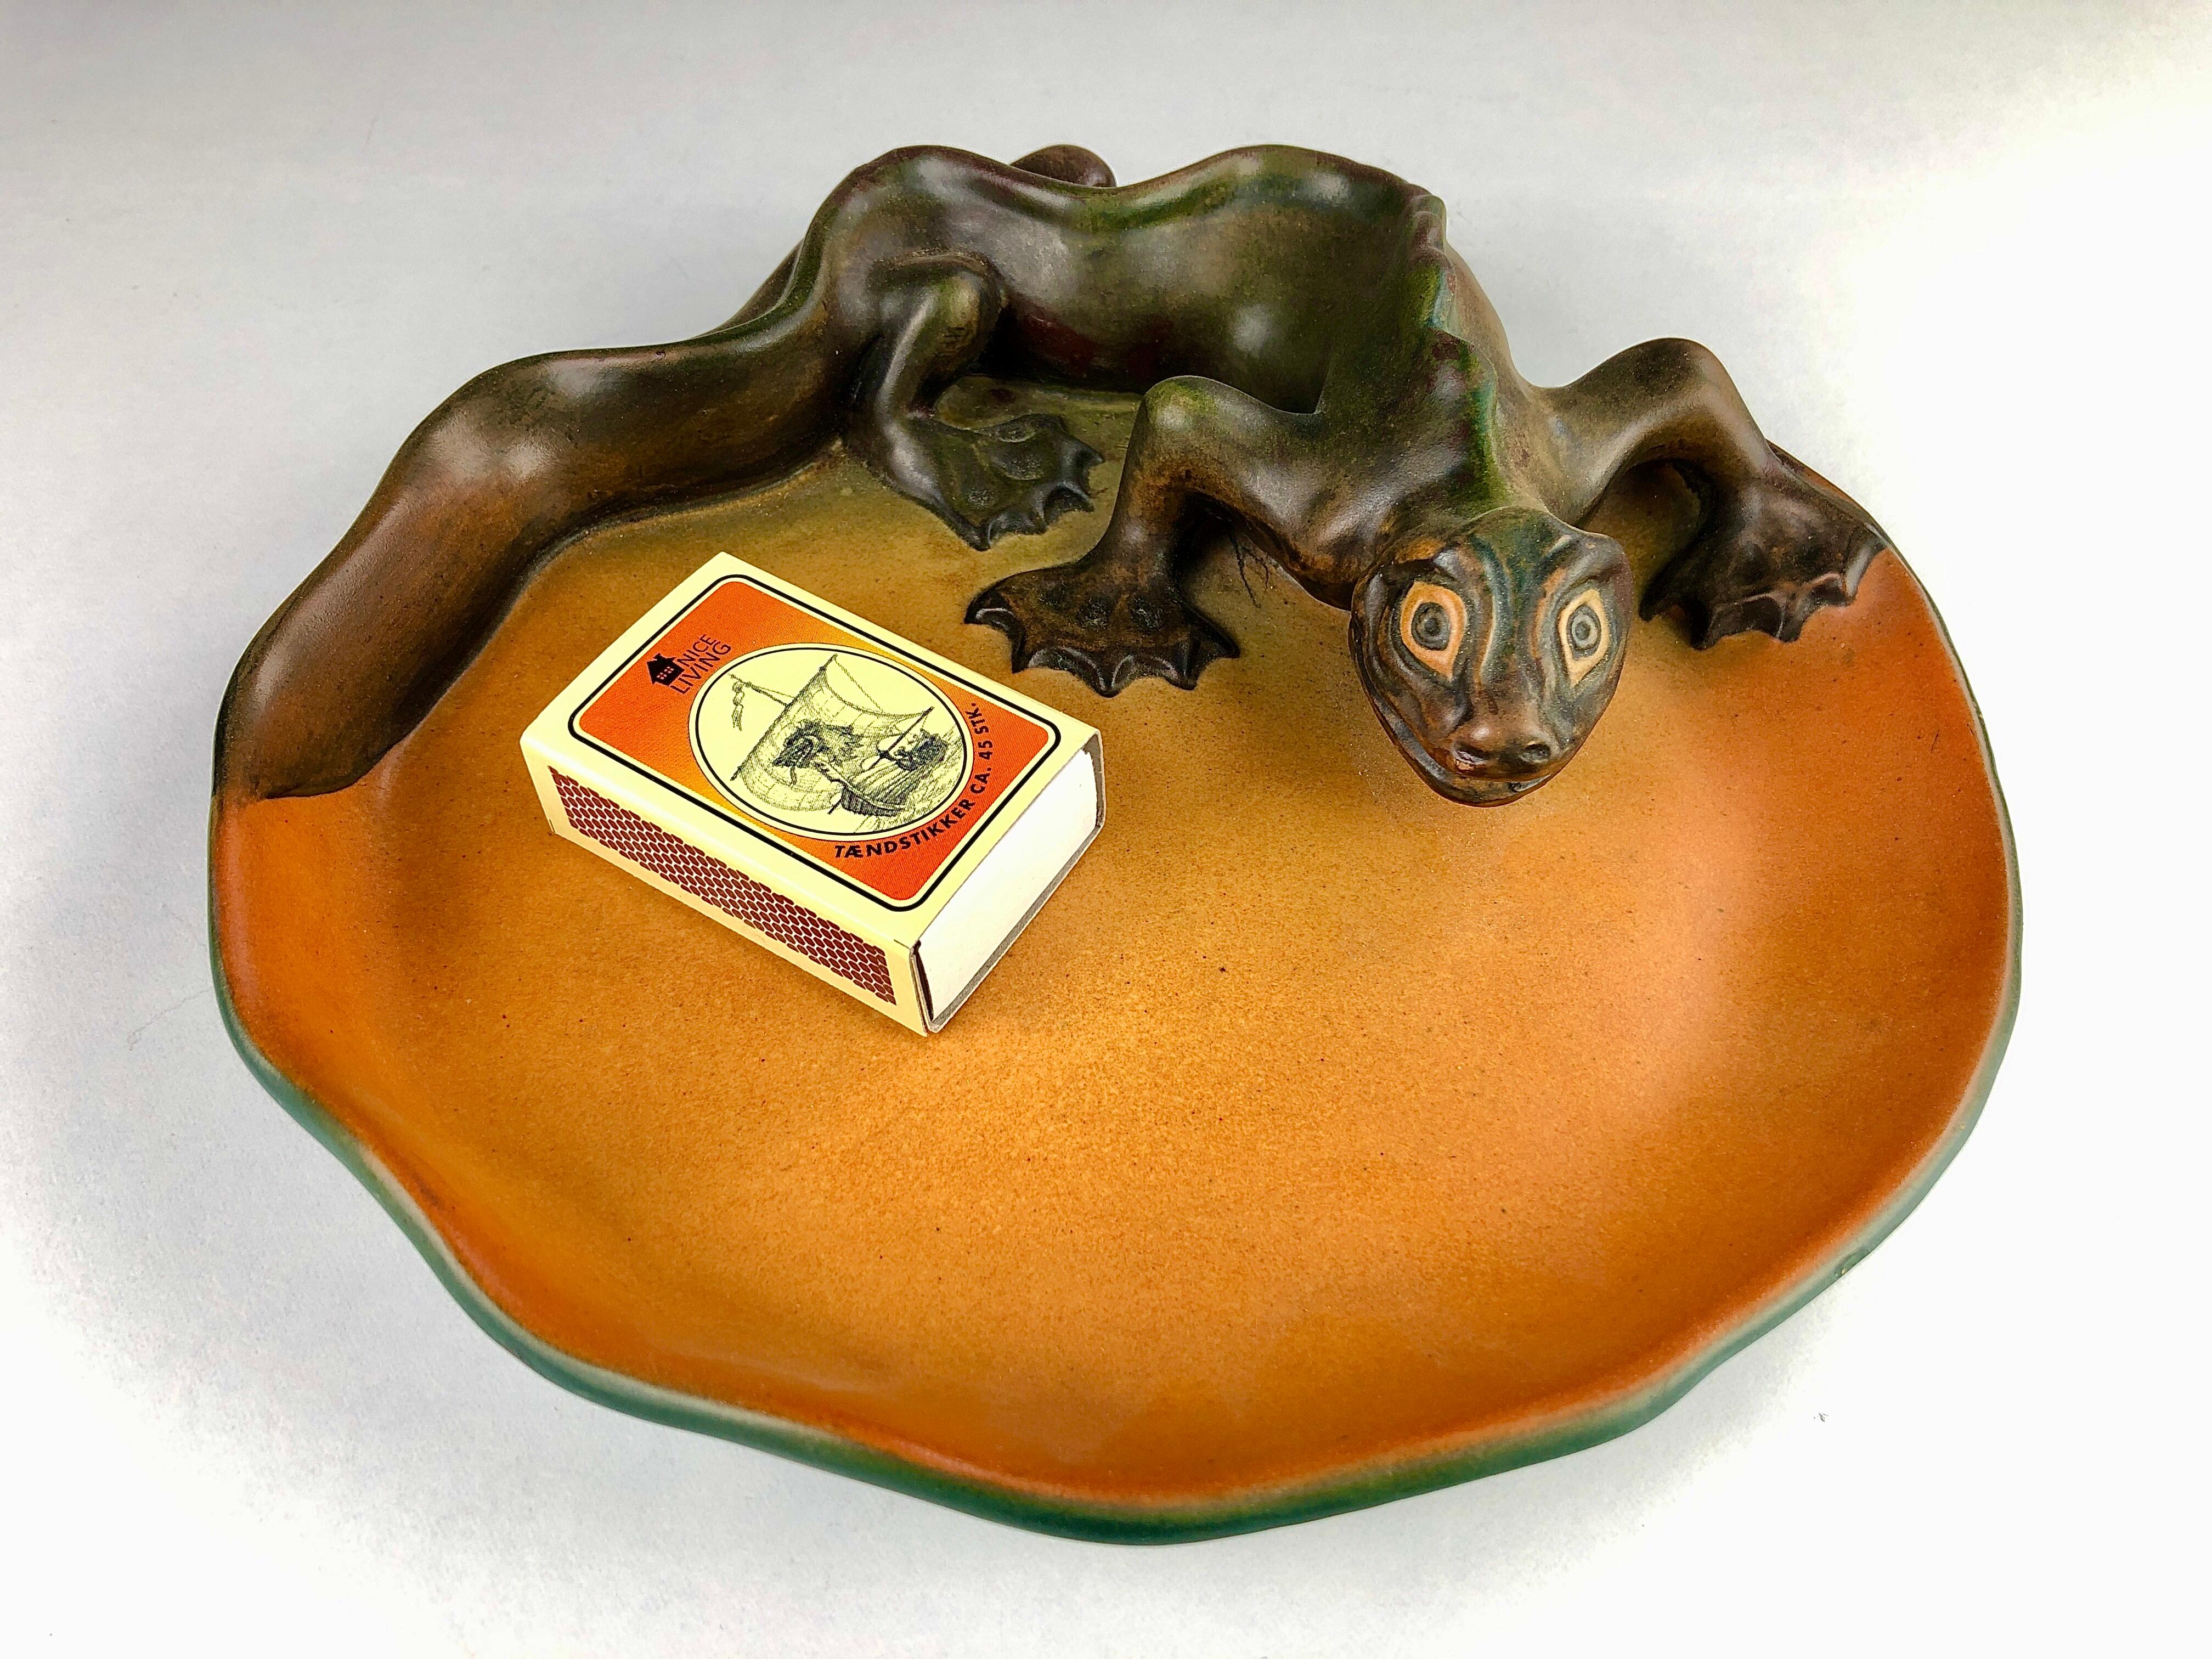 Ceramic Danish Art Nouveau Lizard Ash Tray / Bowl by Axel Jensen for P. Ibsens Enke